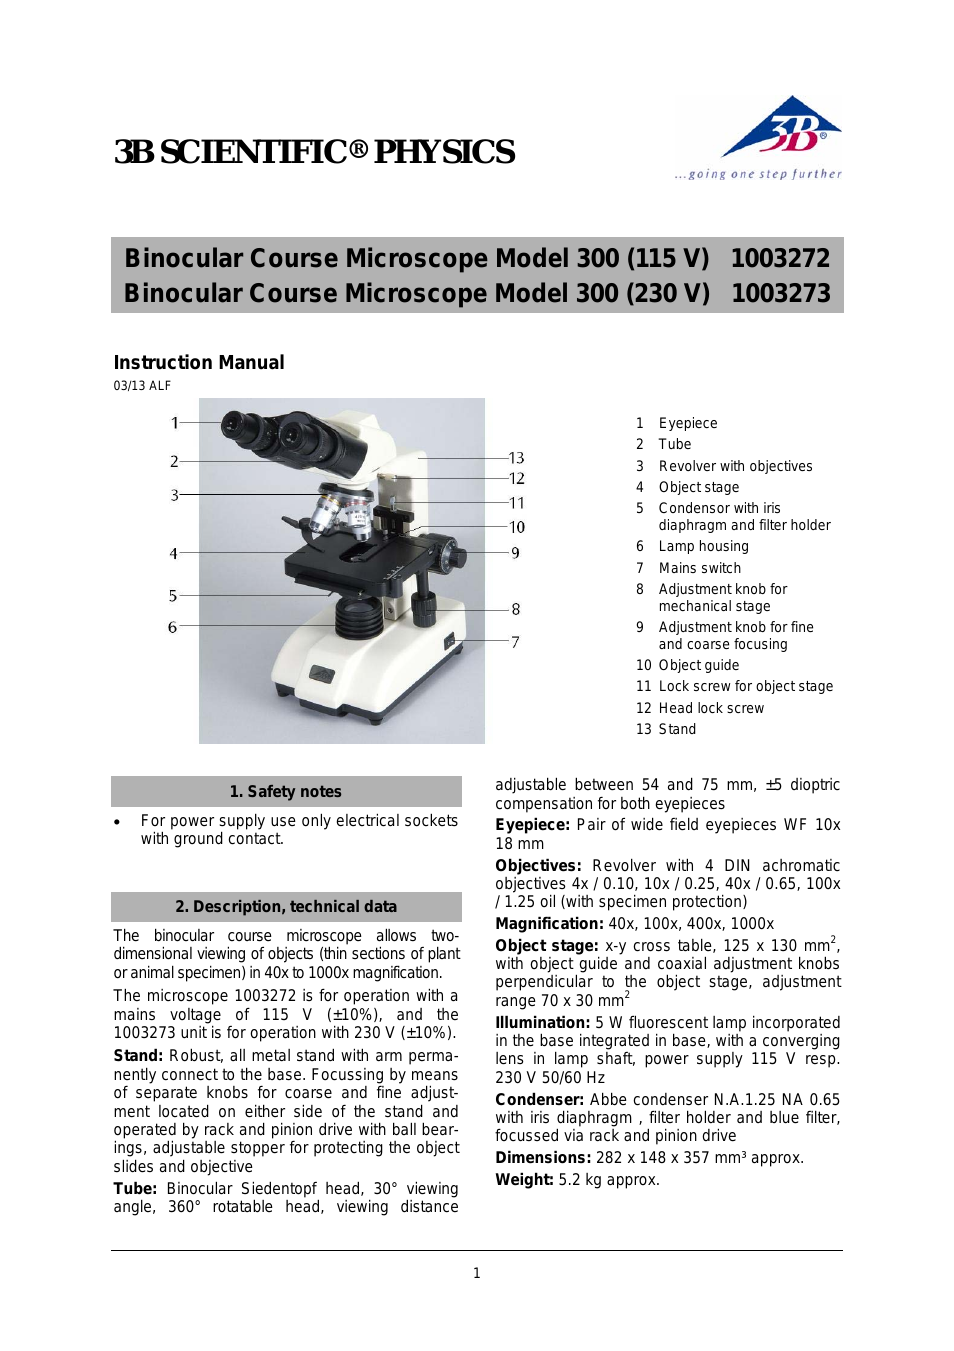 Binocular Course Microscope Model 300 (115 V, 50__60 Hz)